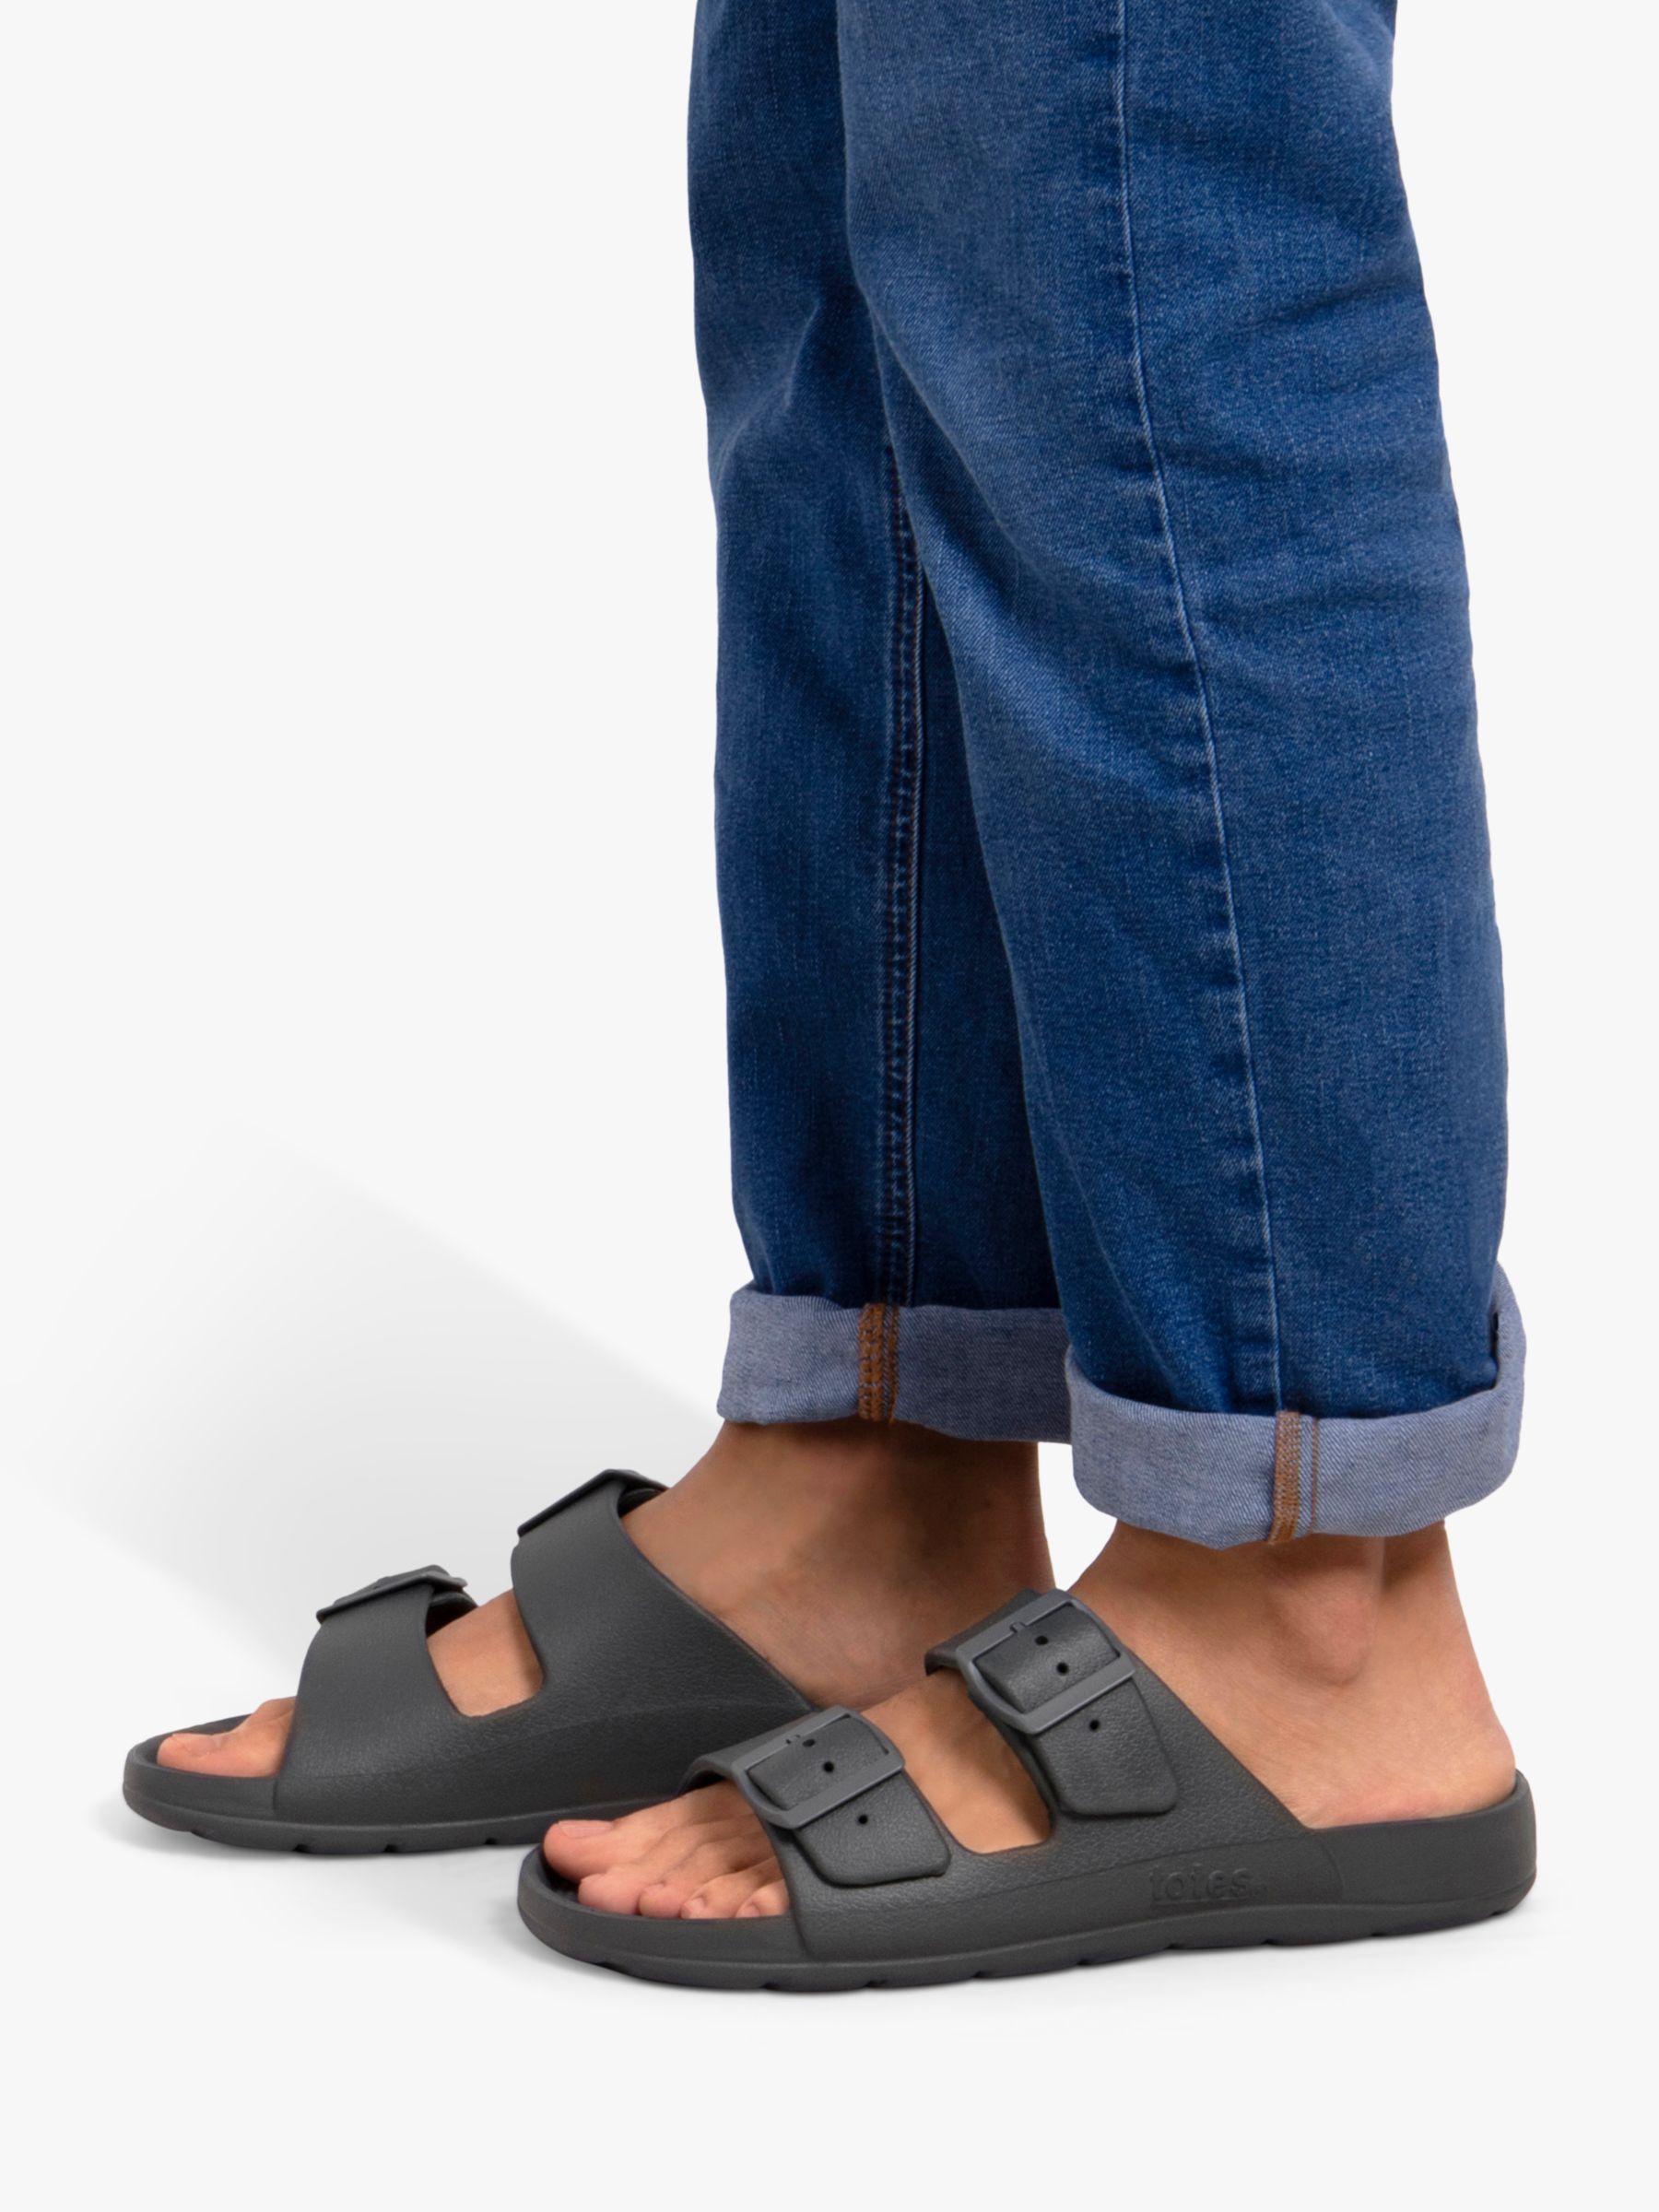 totes SOLBOUNCE Adjustable Slider Sandals, Mineral Grey, 11